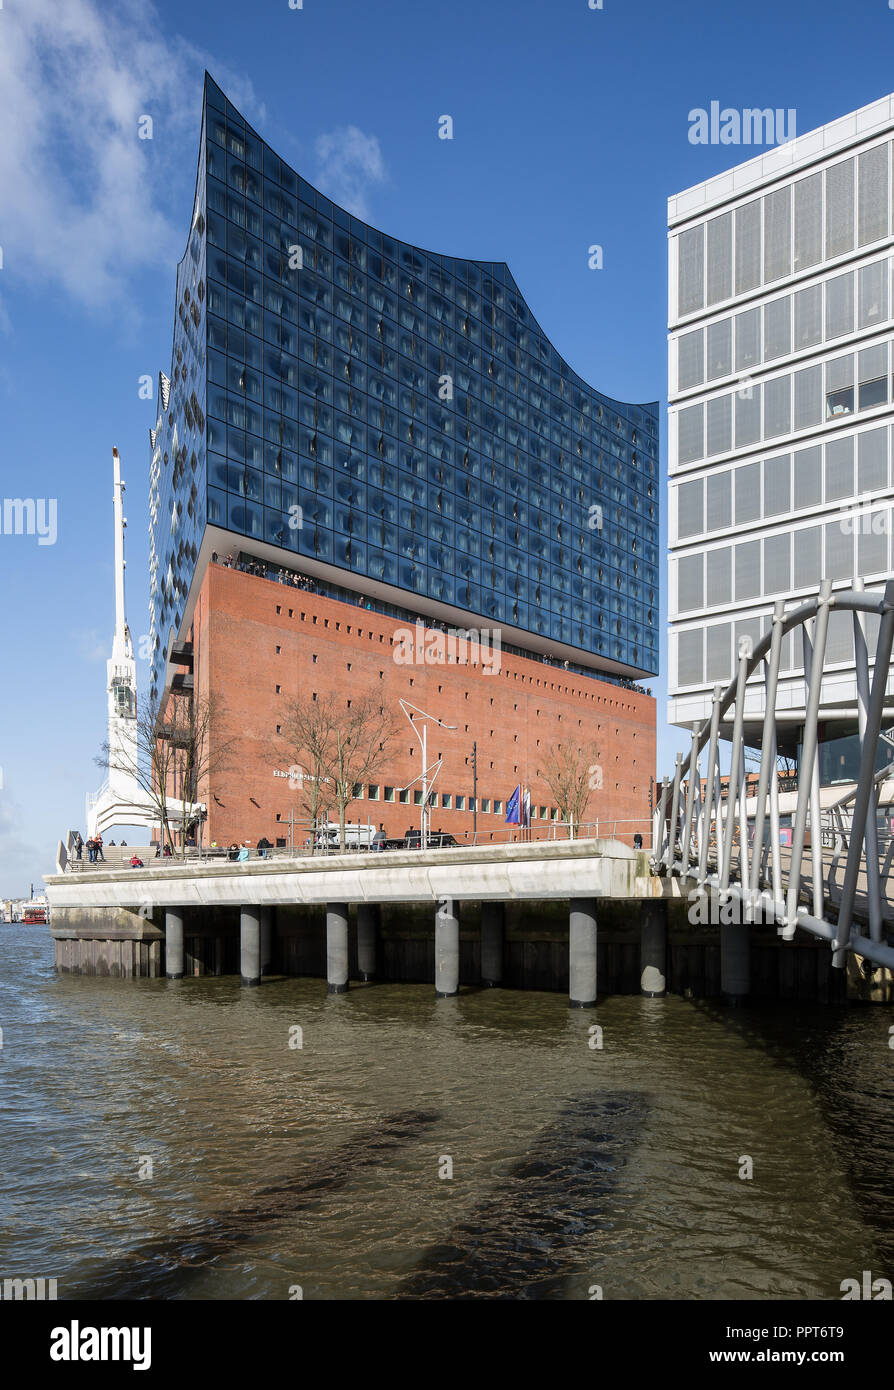 Hamburgo, la Elbphilharmonie, Untersicht Von Osten, rechts Neubau am Entwurf Kaiserkai, Herzog & de Meuron, erbaut 2007-2016 Foto de stock